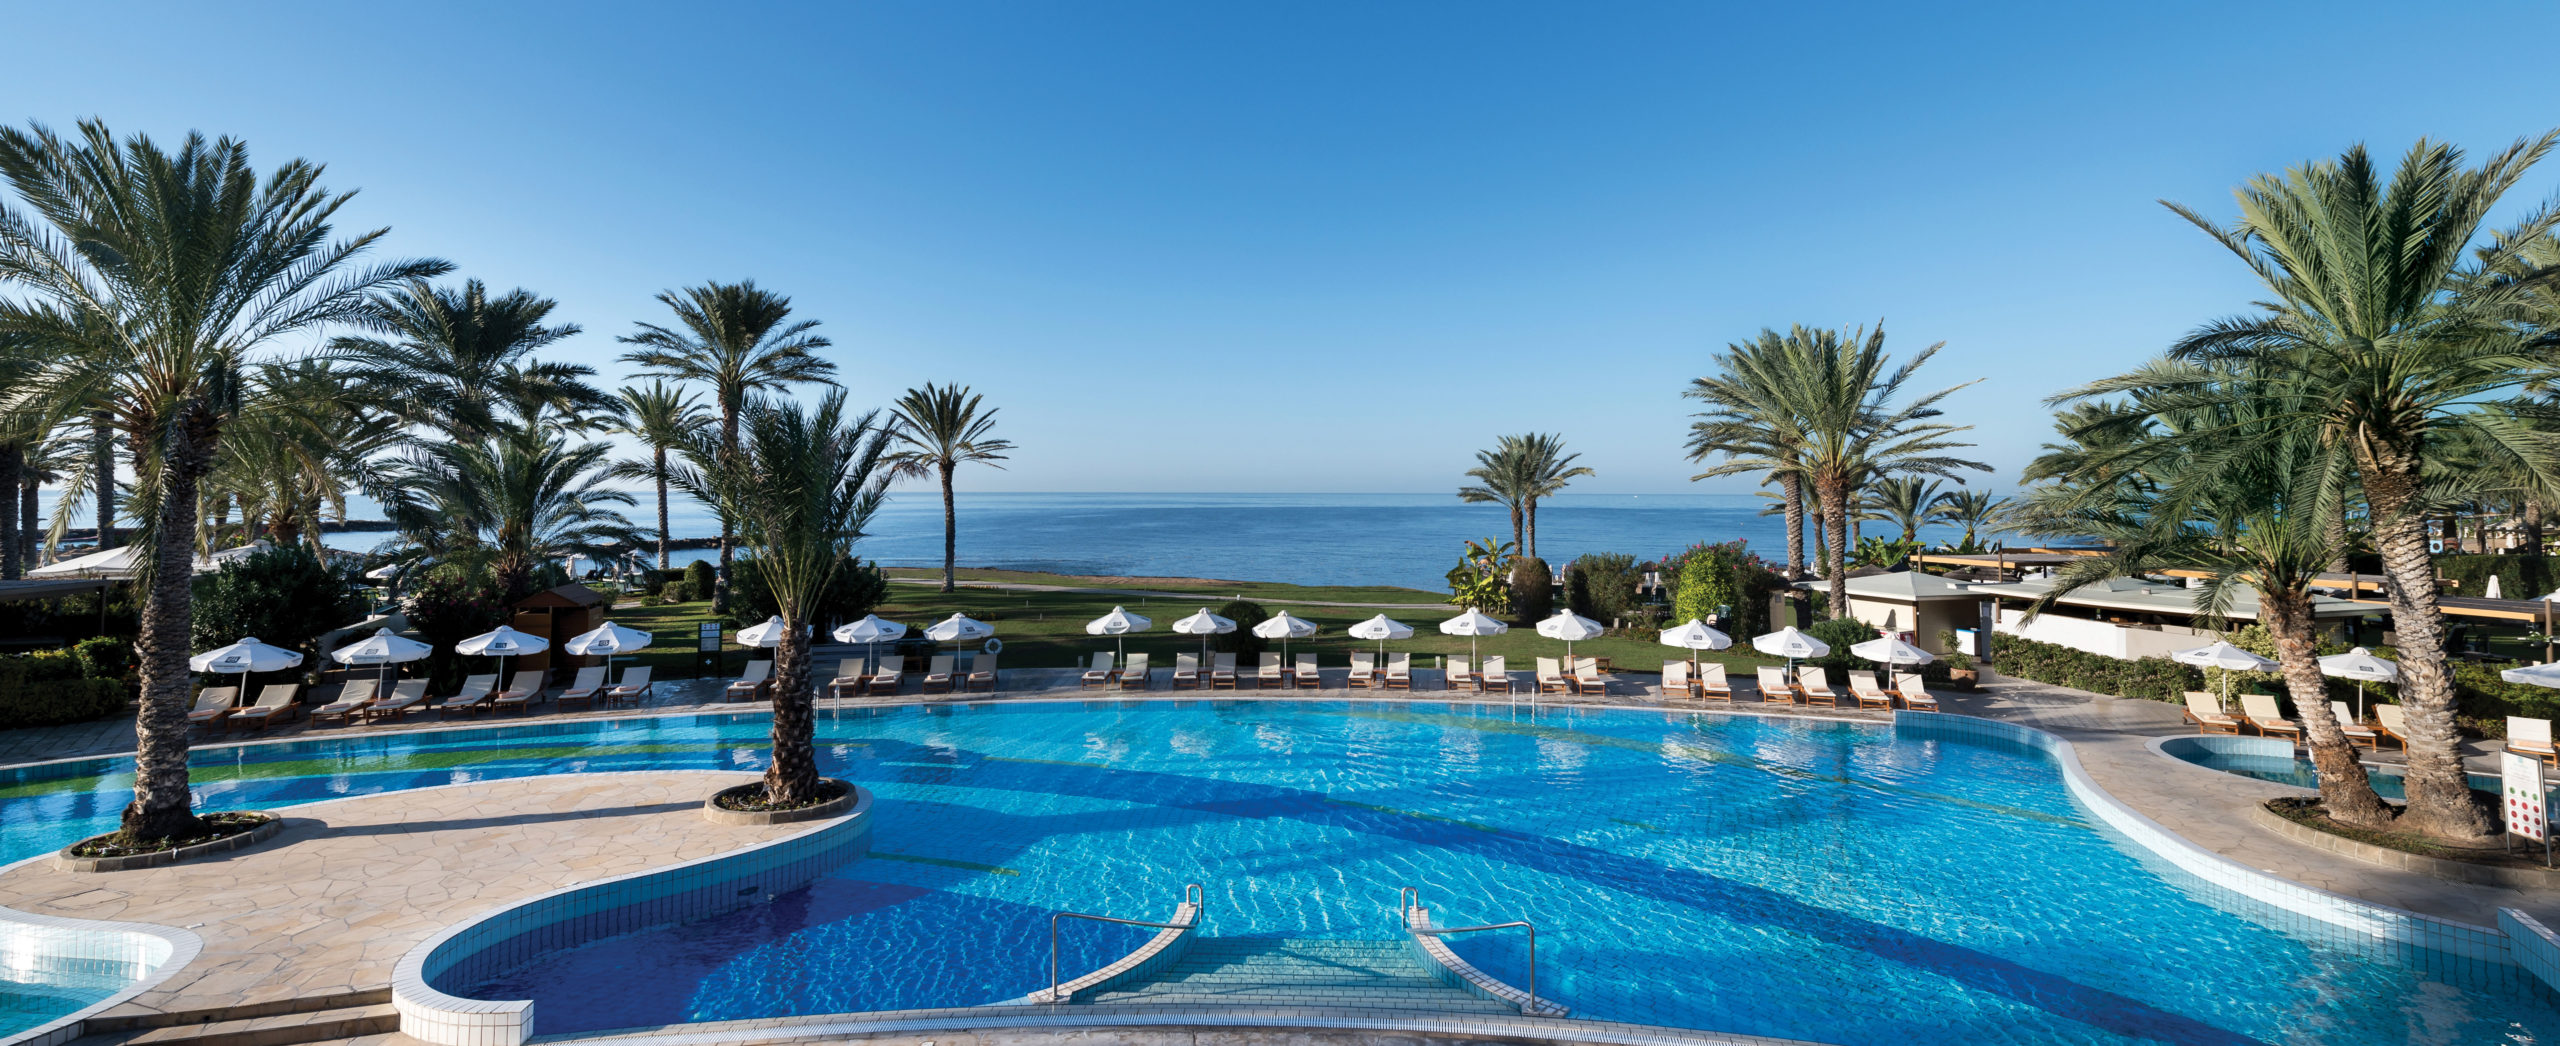 Athena Beach Hotel, Paphos, Zypern